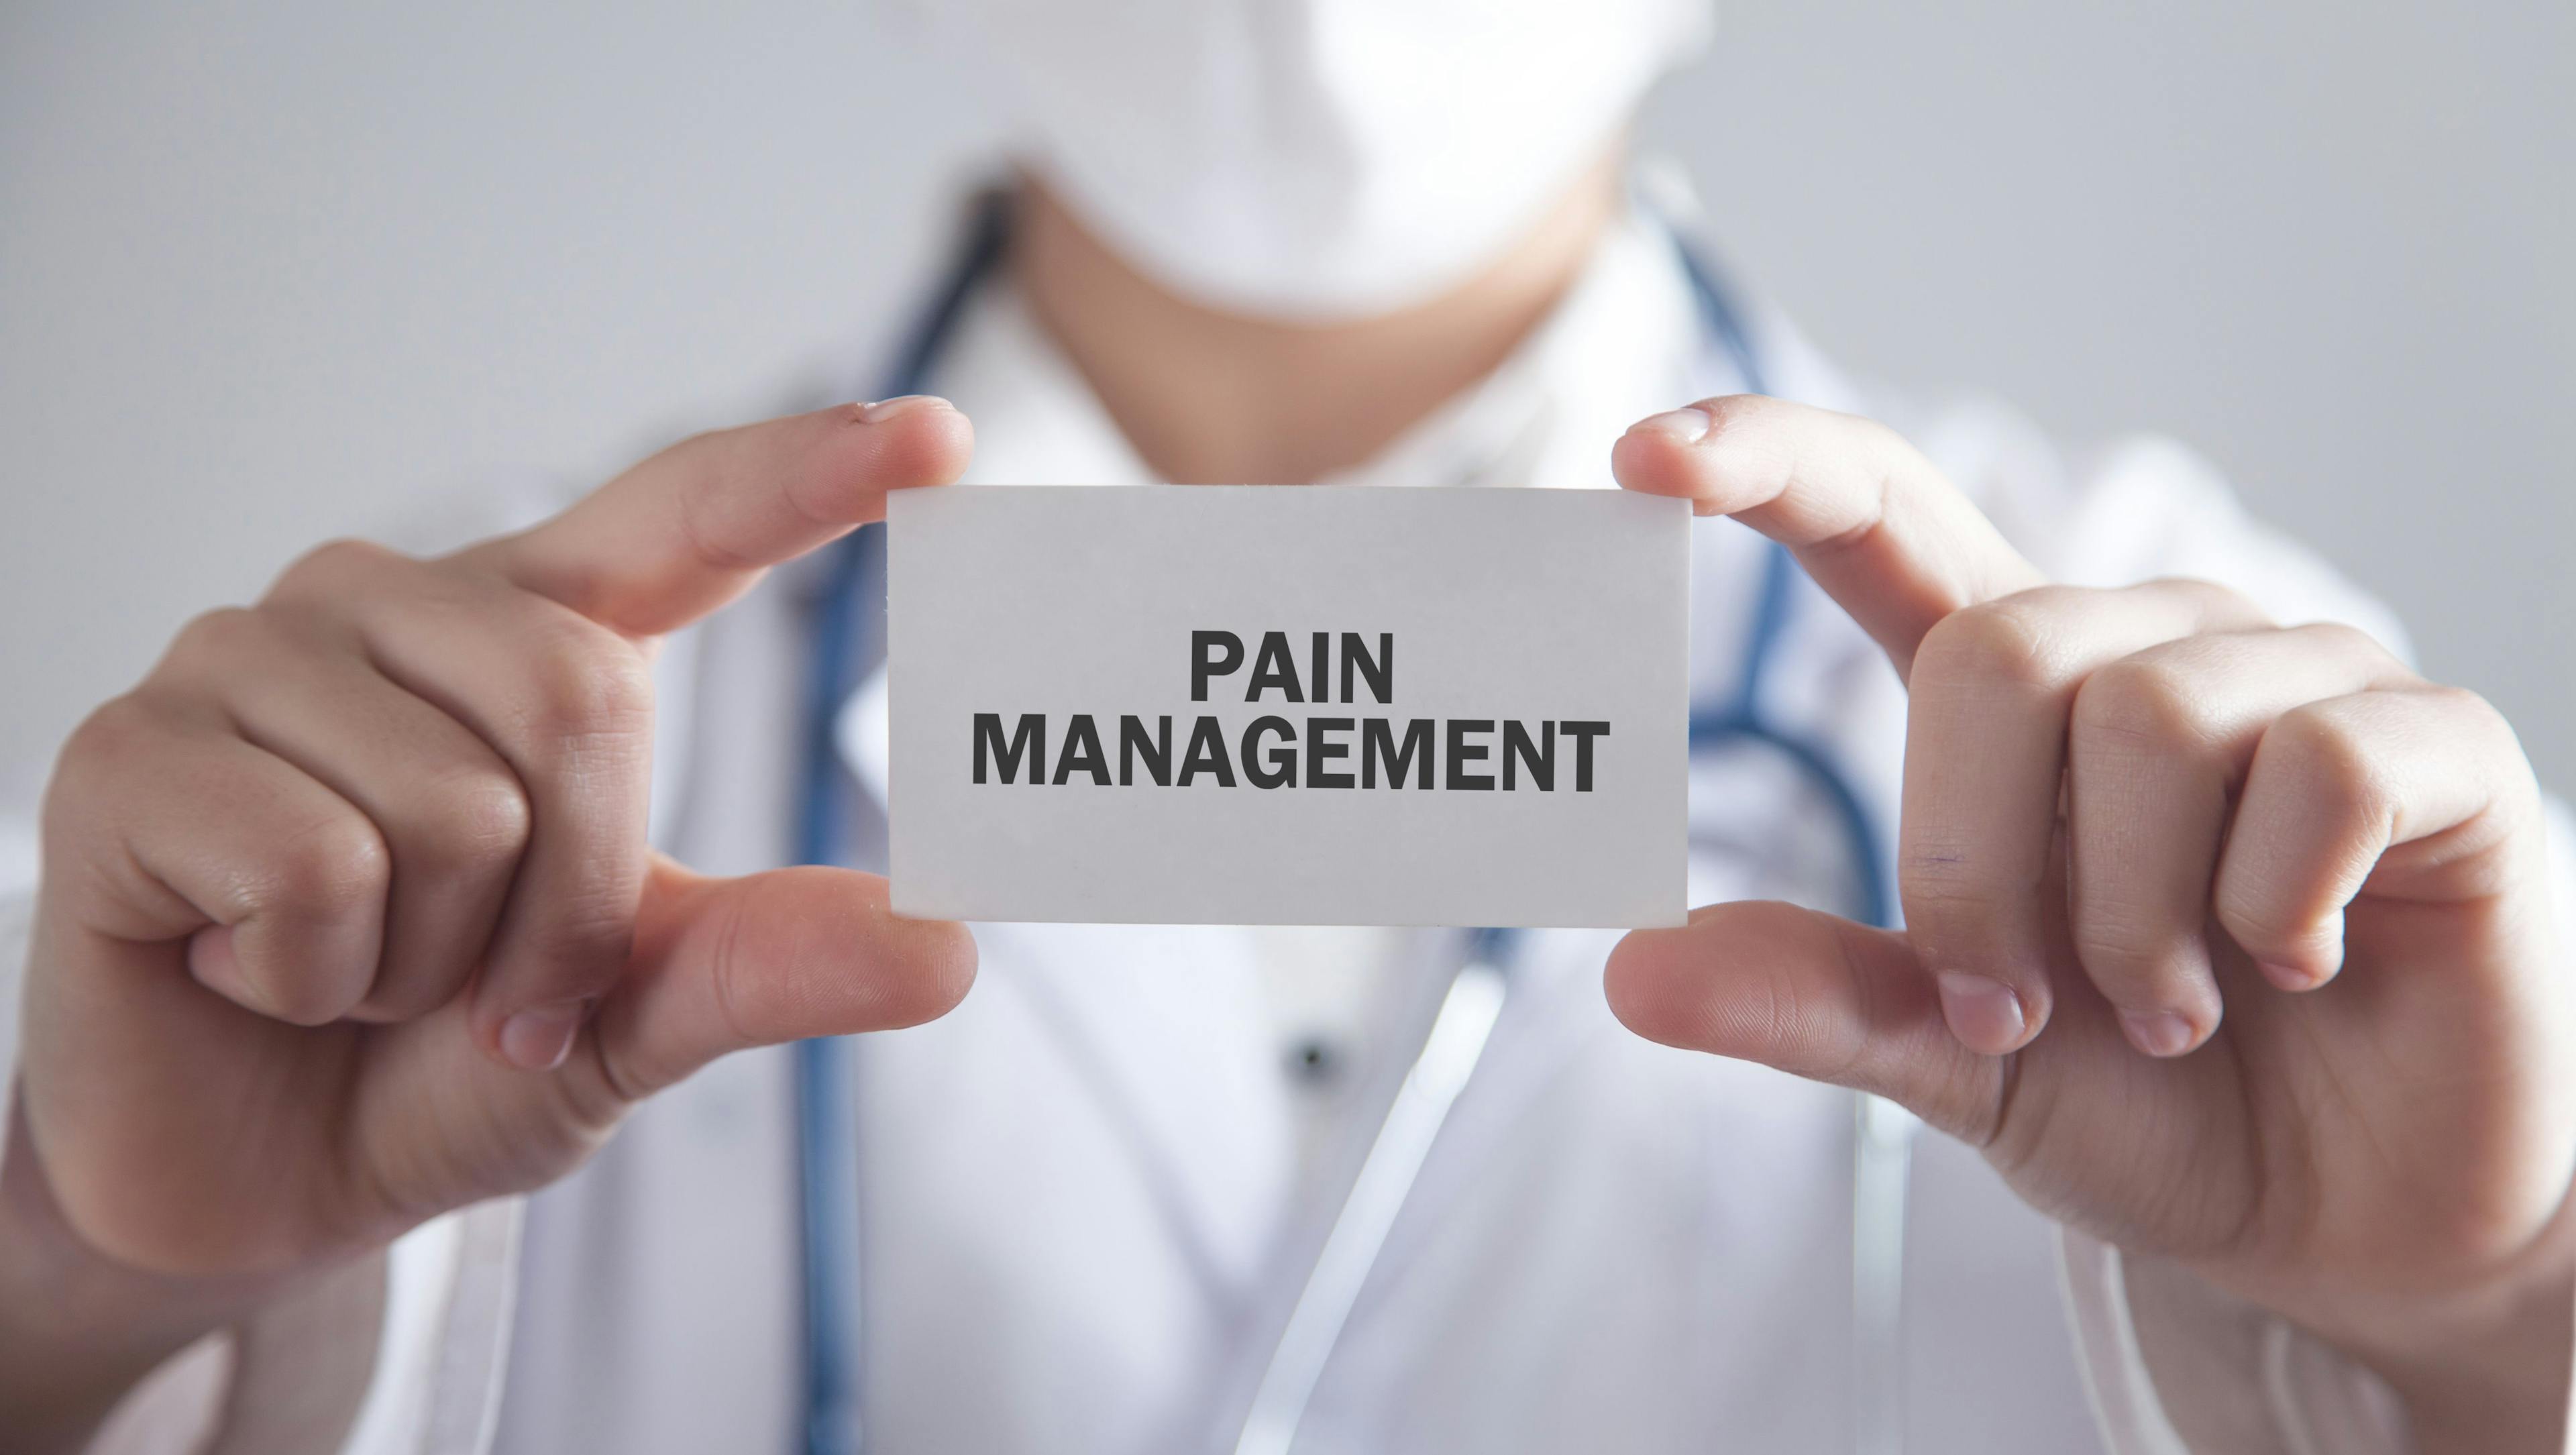 Doctor Displaying Pain Management Card | image credit: andranik123 - stock.adobe.com